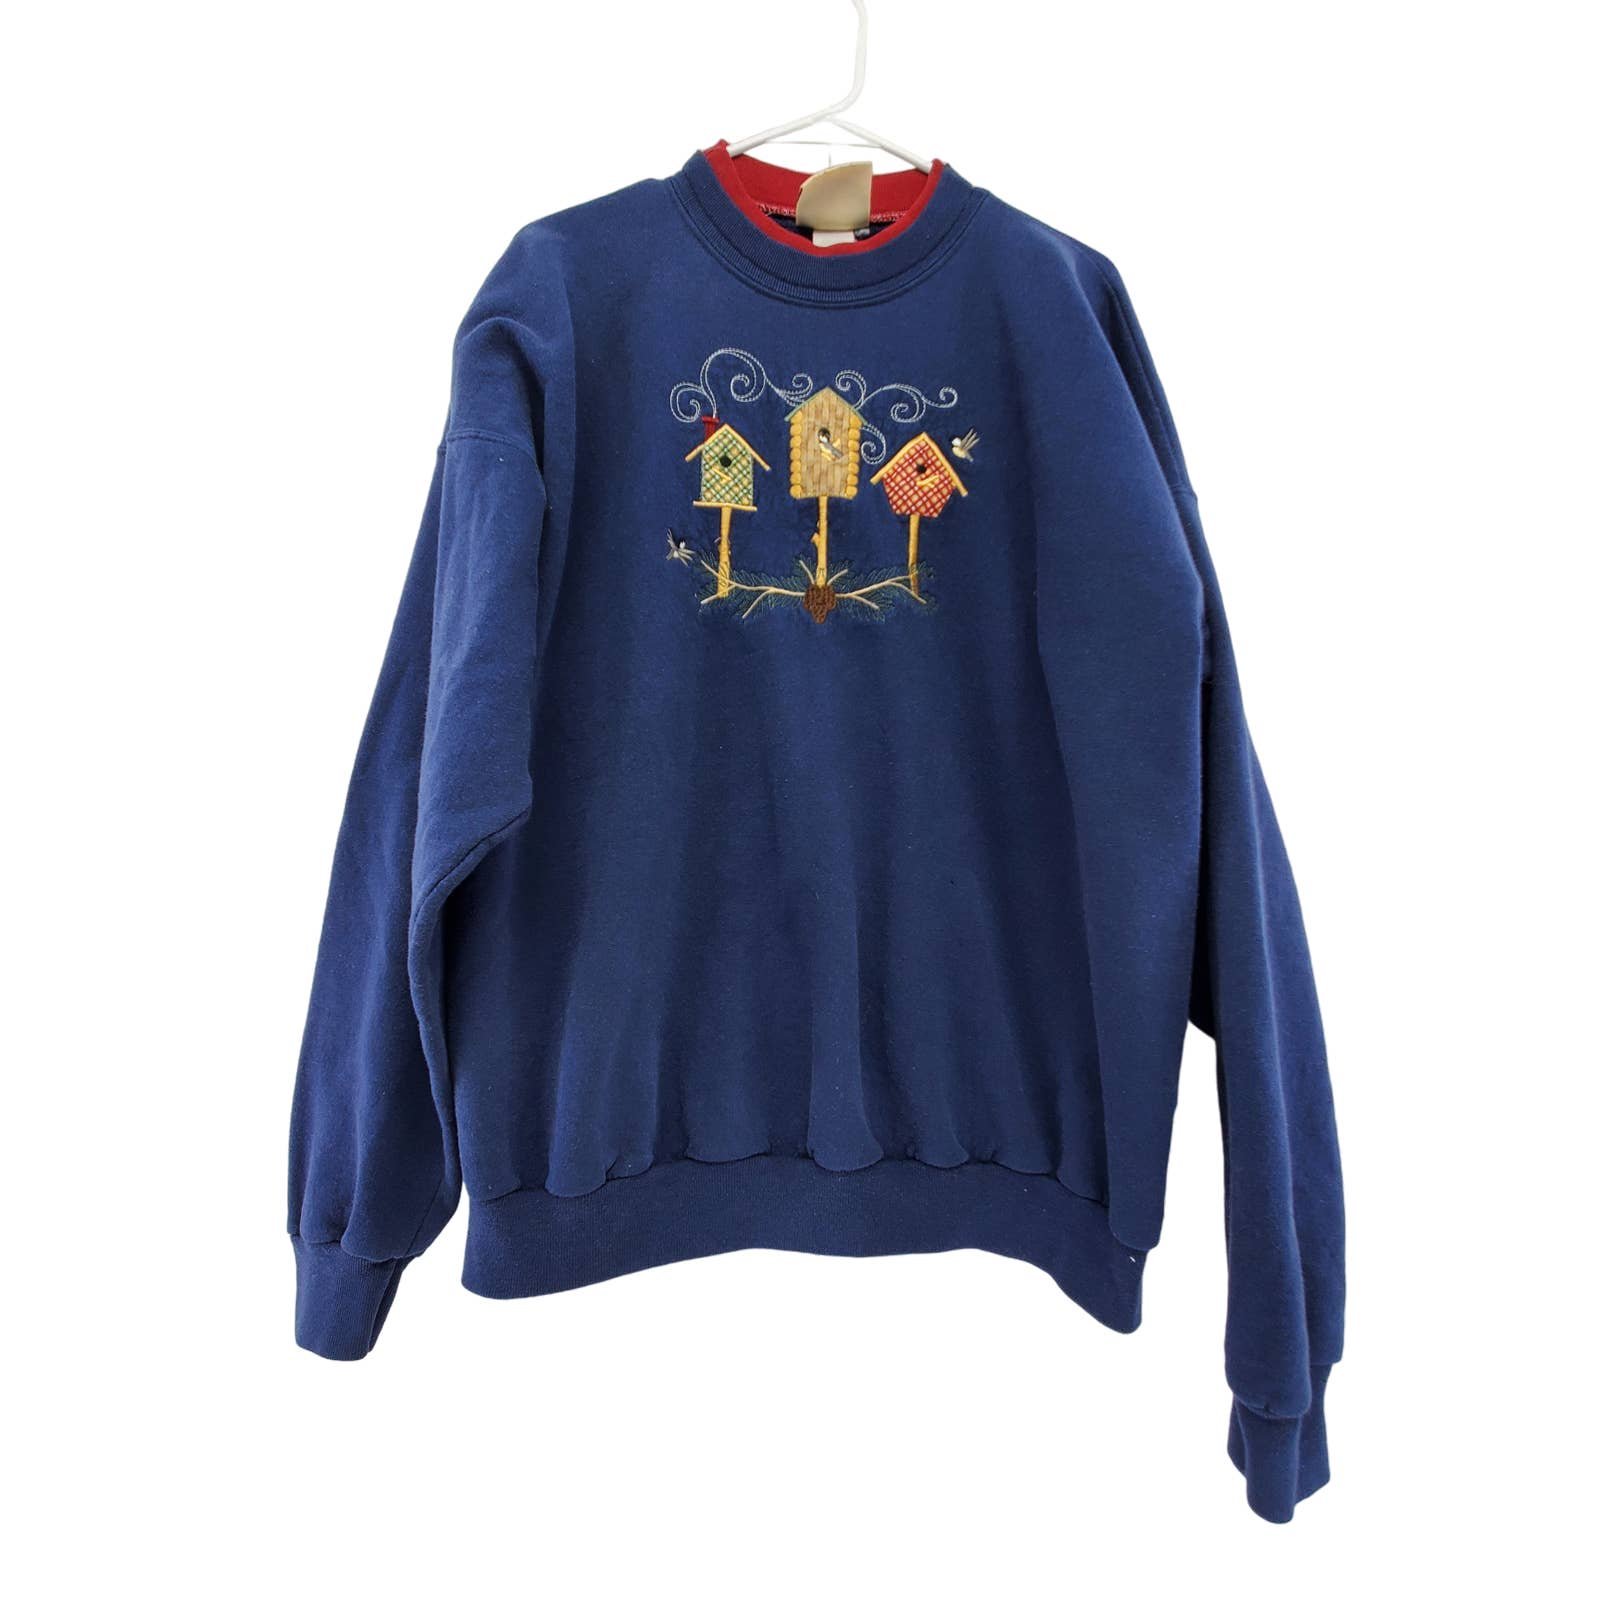 Stylish Vintage Topstitch Plus Size 2X Grandma Bird Feeder Embroidered Jersey Sweater PPxLLnRo0 Buying Cheap